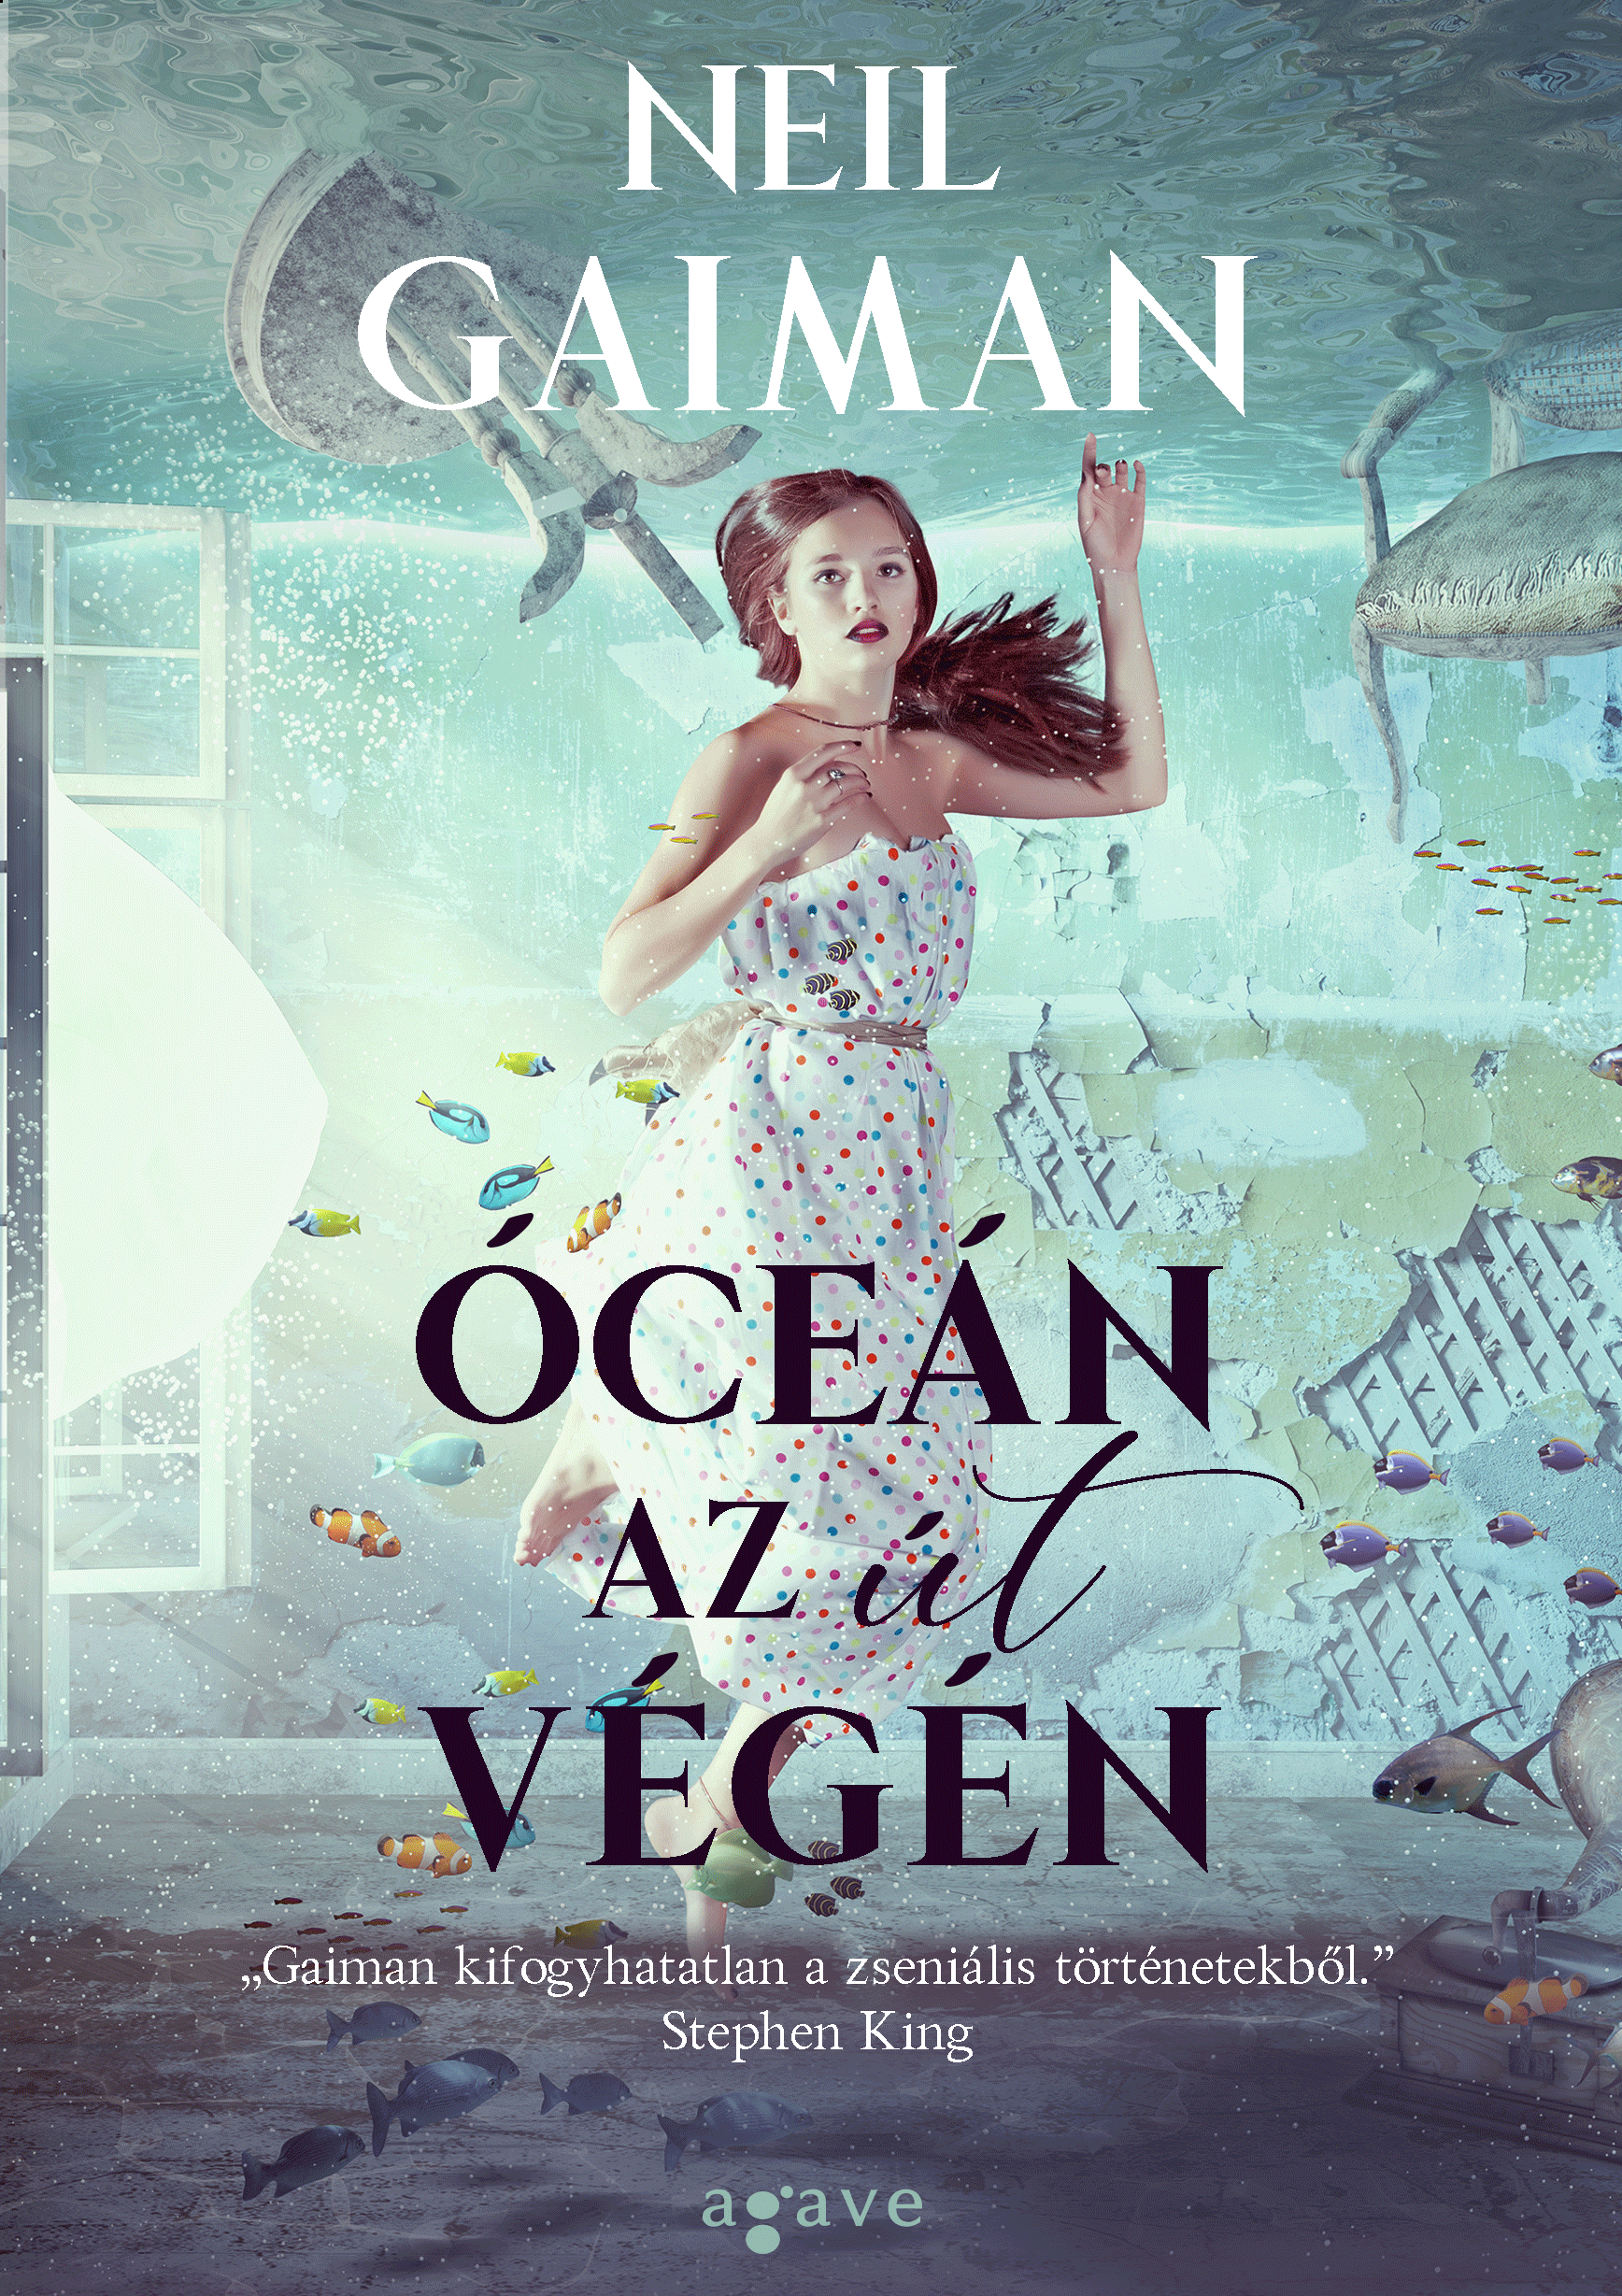 neil_gaiman_ocean_az_ut_vegen_b1_2020.png